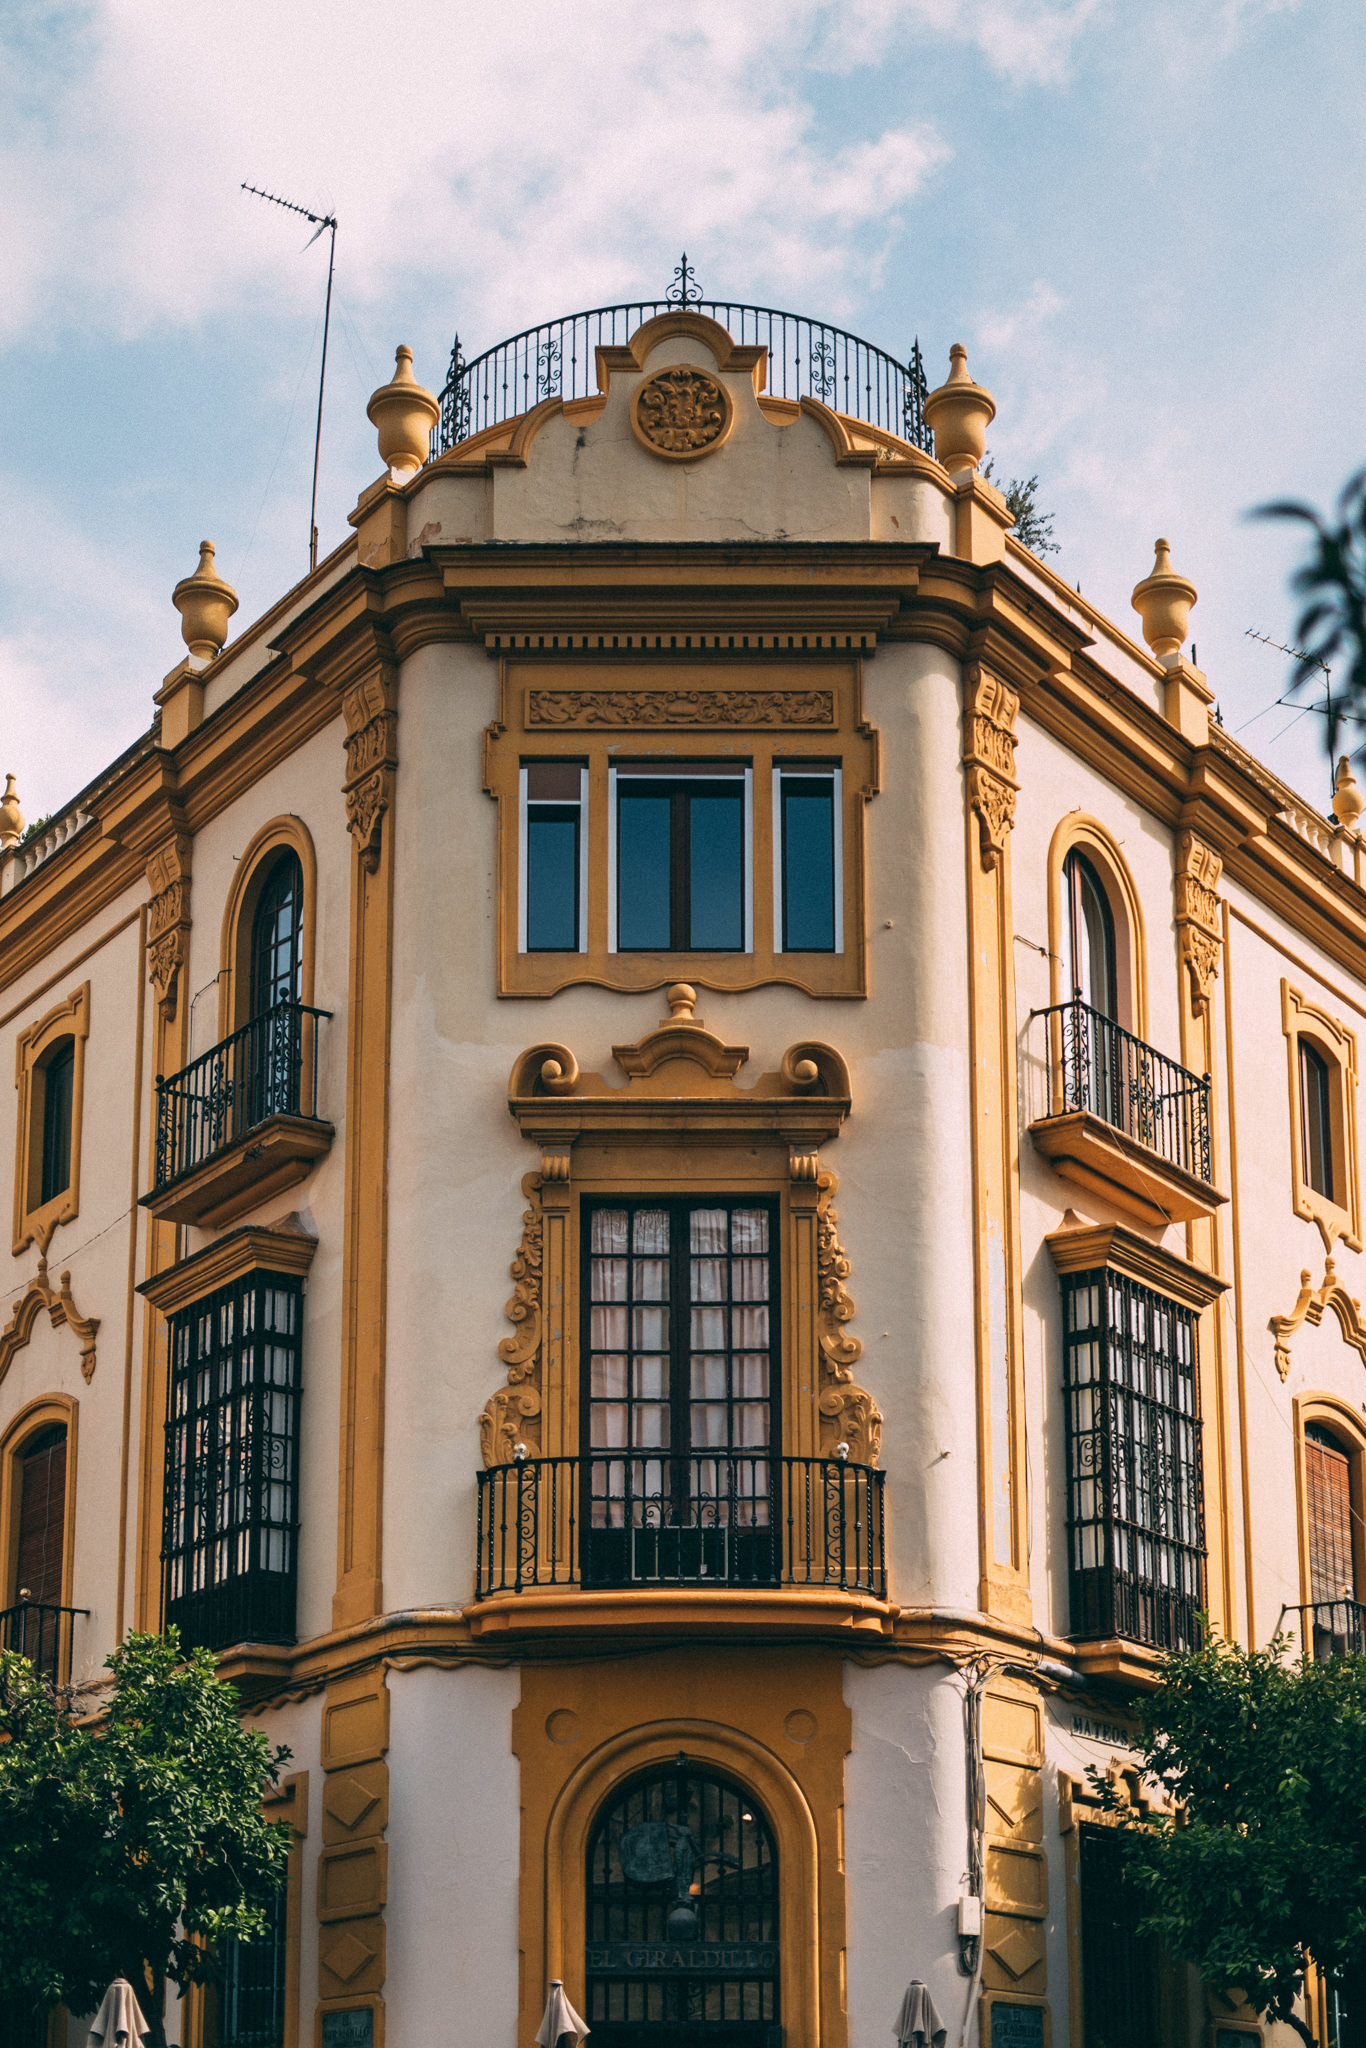 Seville architecture